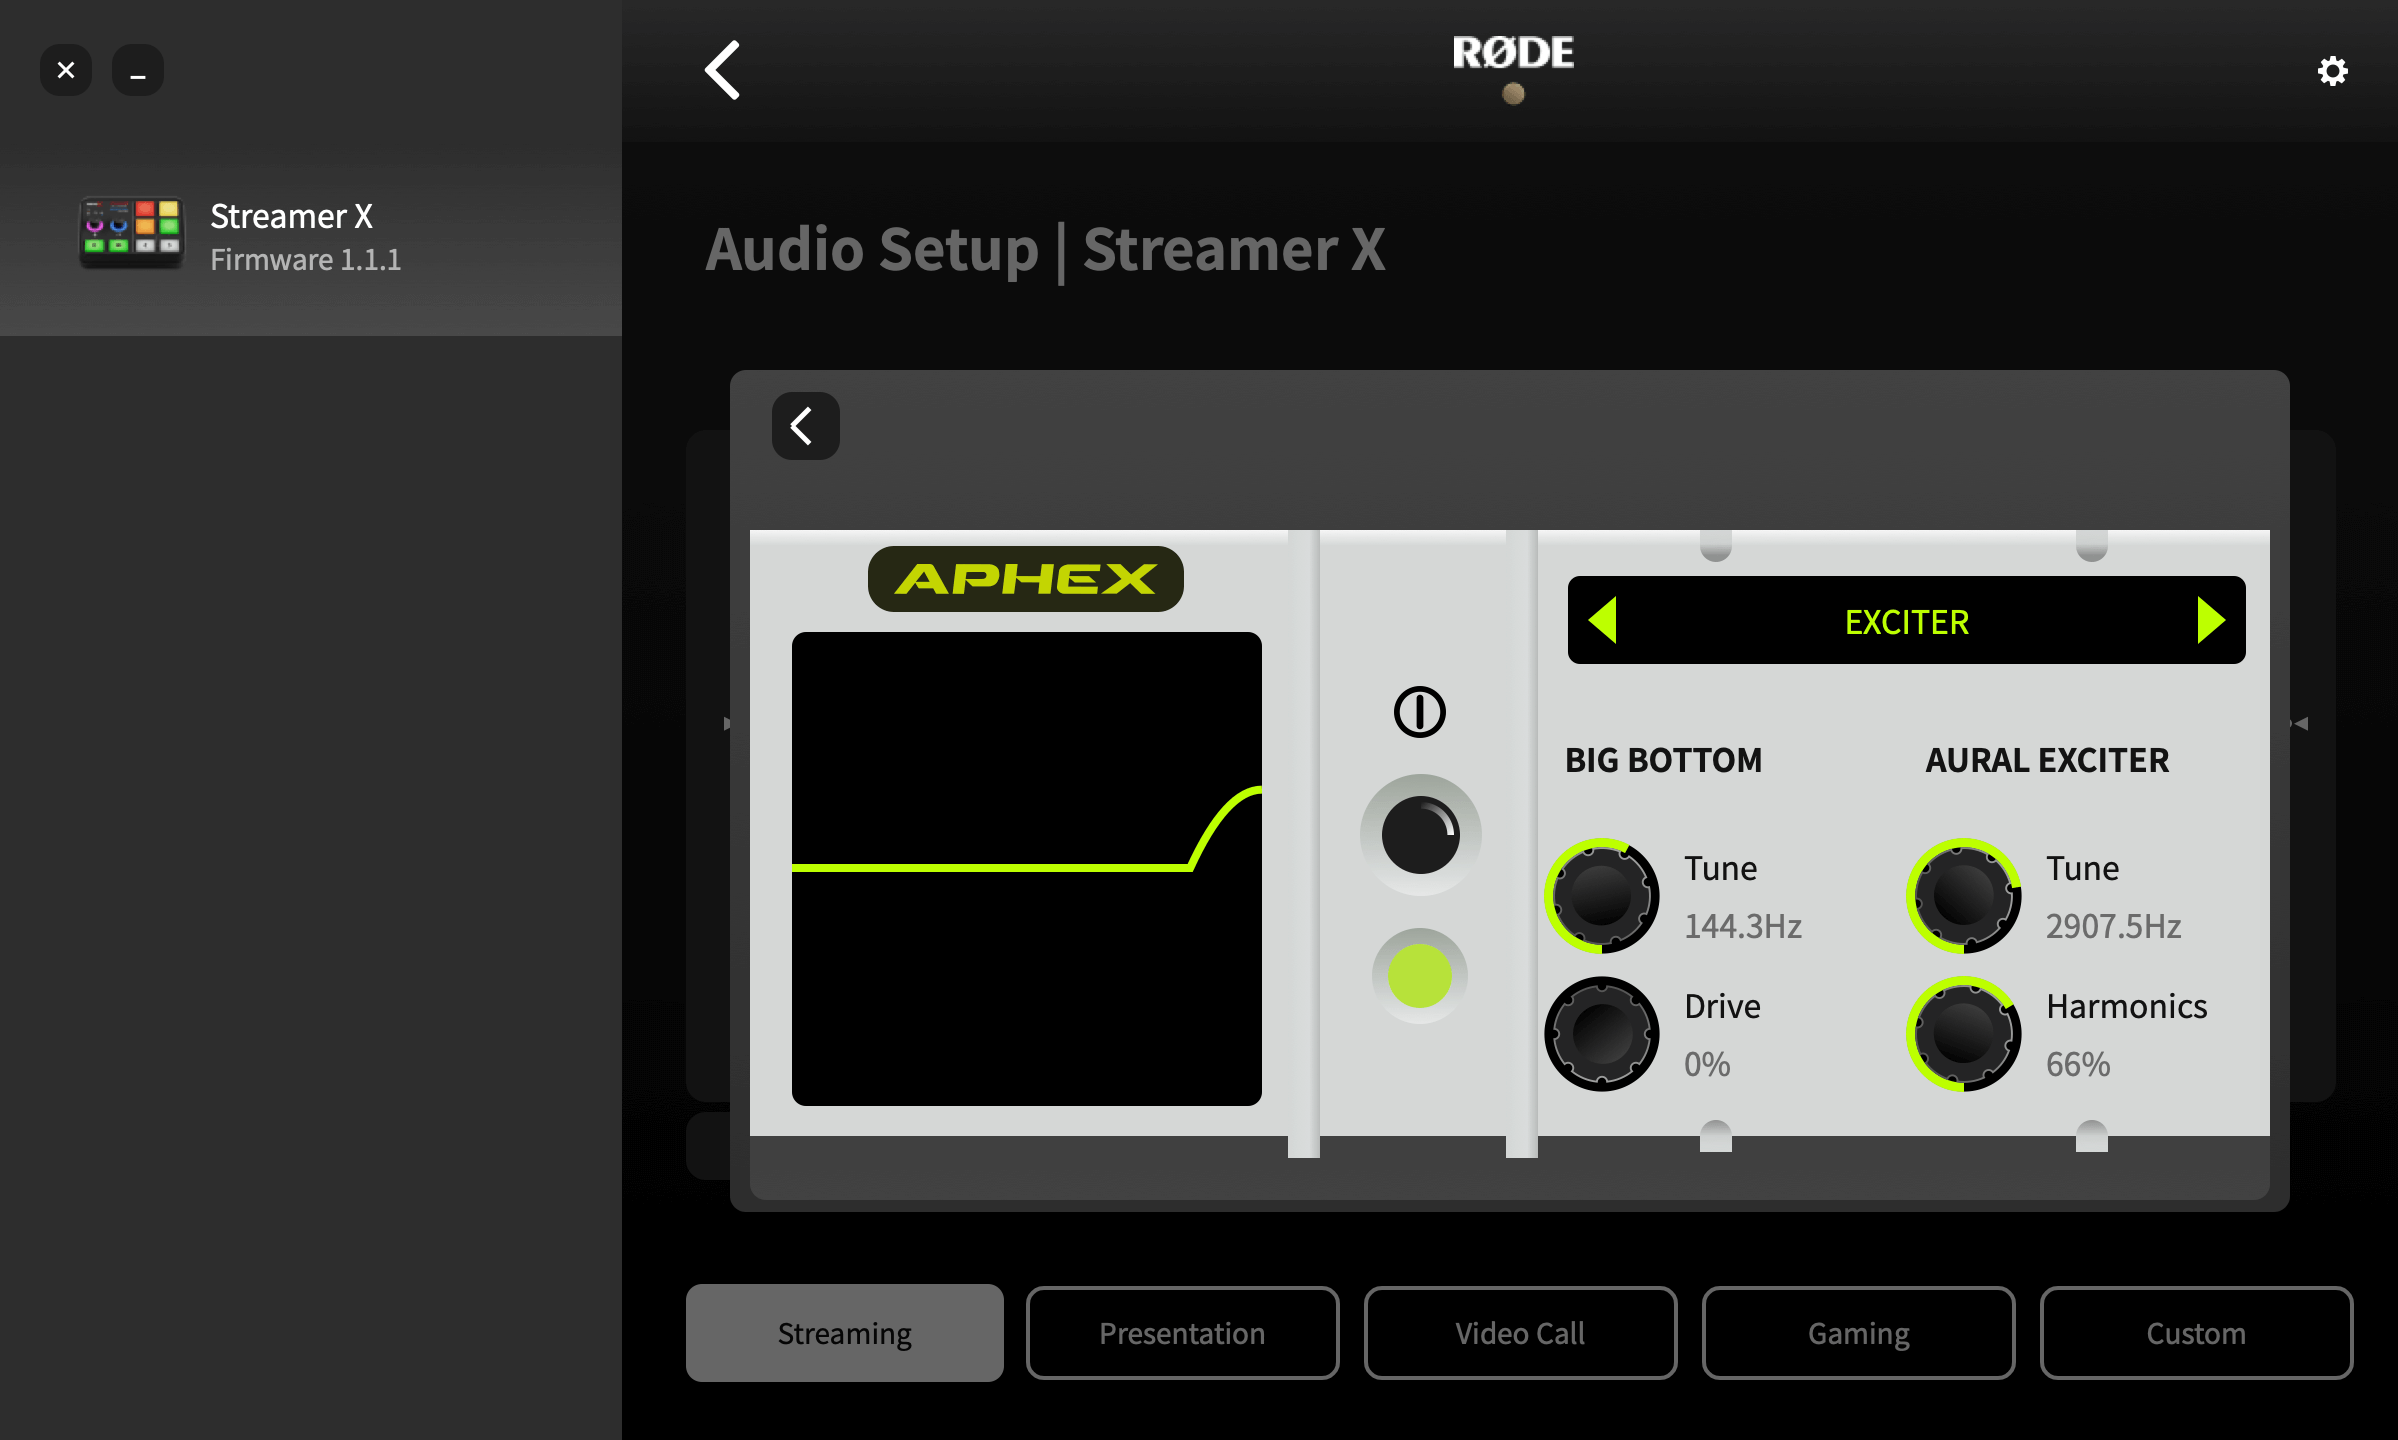 RØDE Central showing Streamer X aural exciter settings